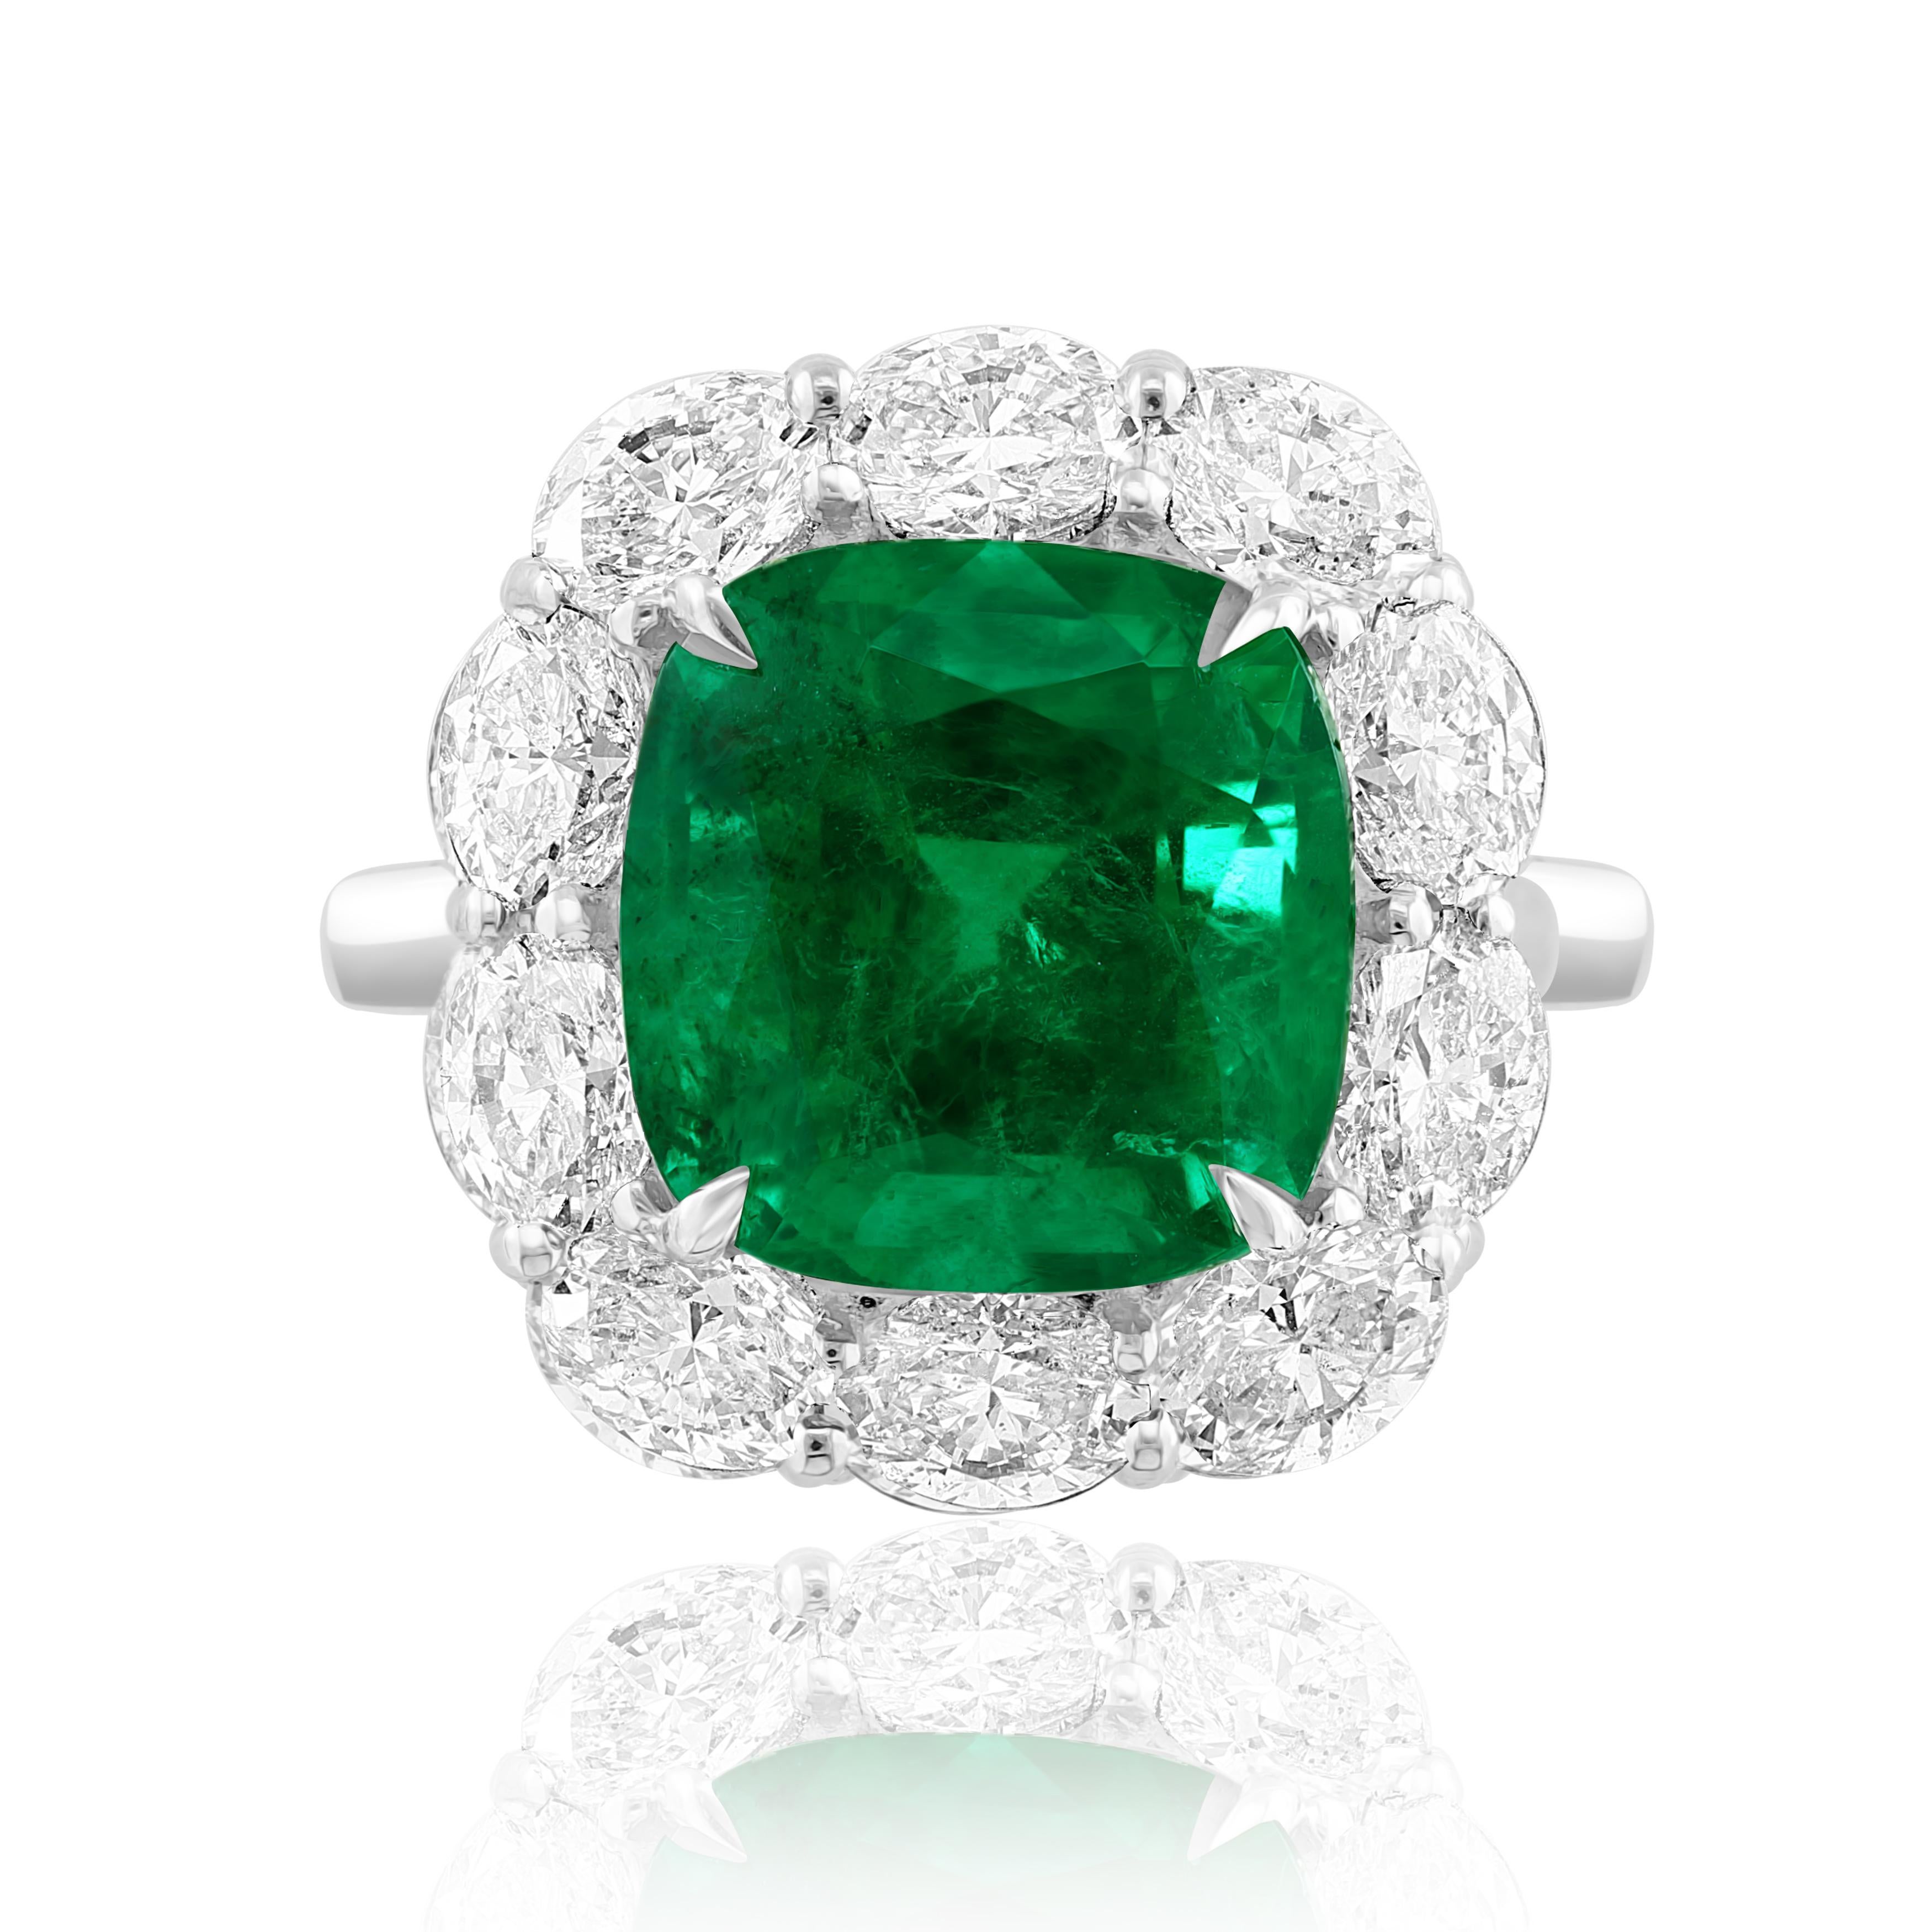 Modern Certified 6.58 Carat Cushion Cut Emerald Diamond Ring in Platinum For Sale